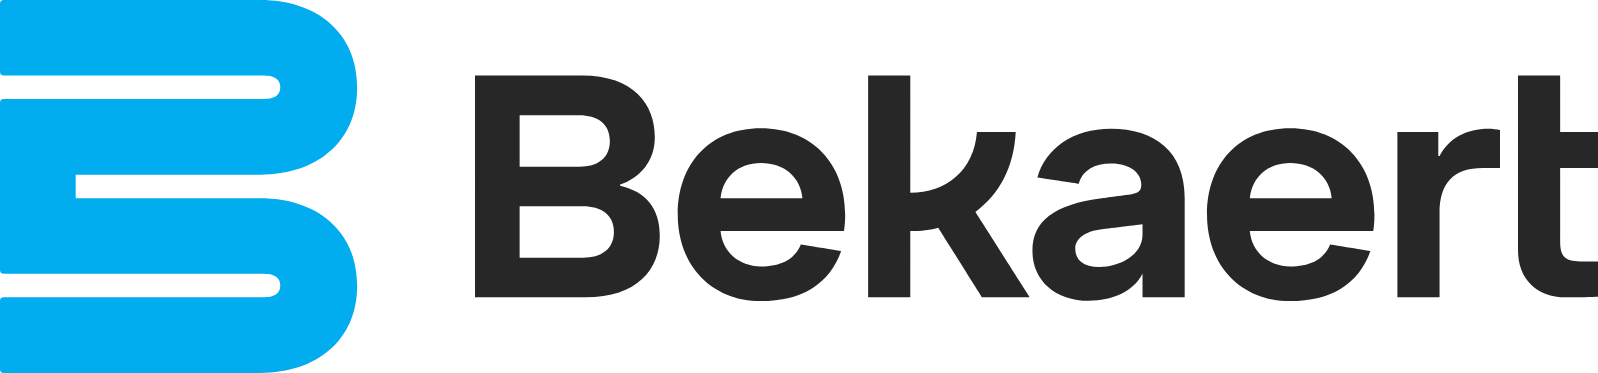 NV Bekaert logo large (transparent PNG)